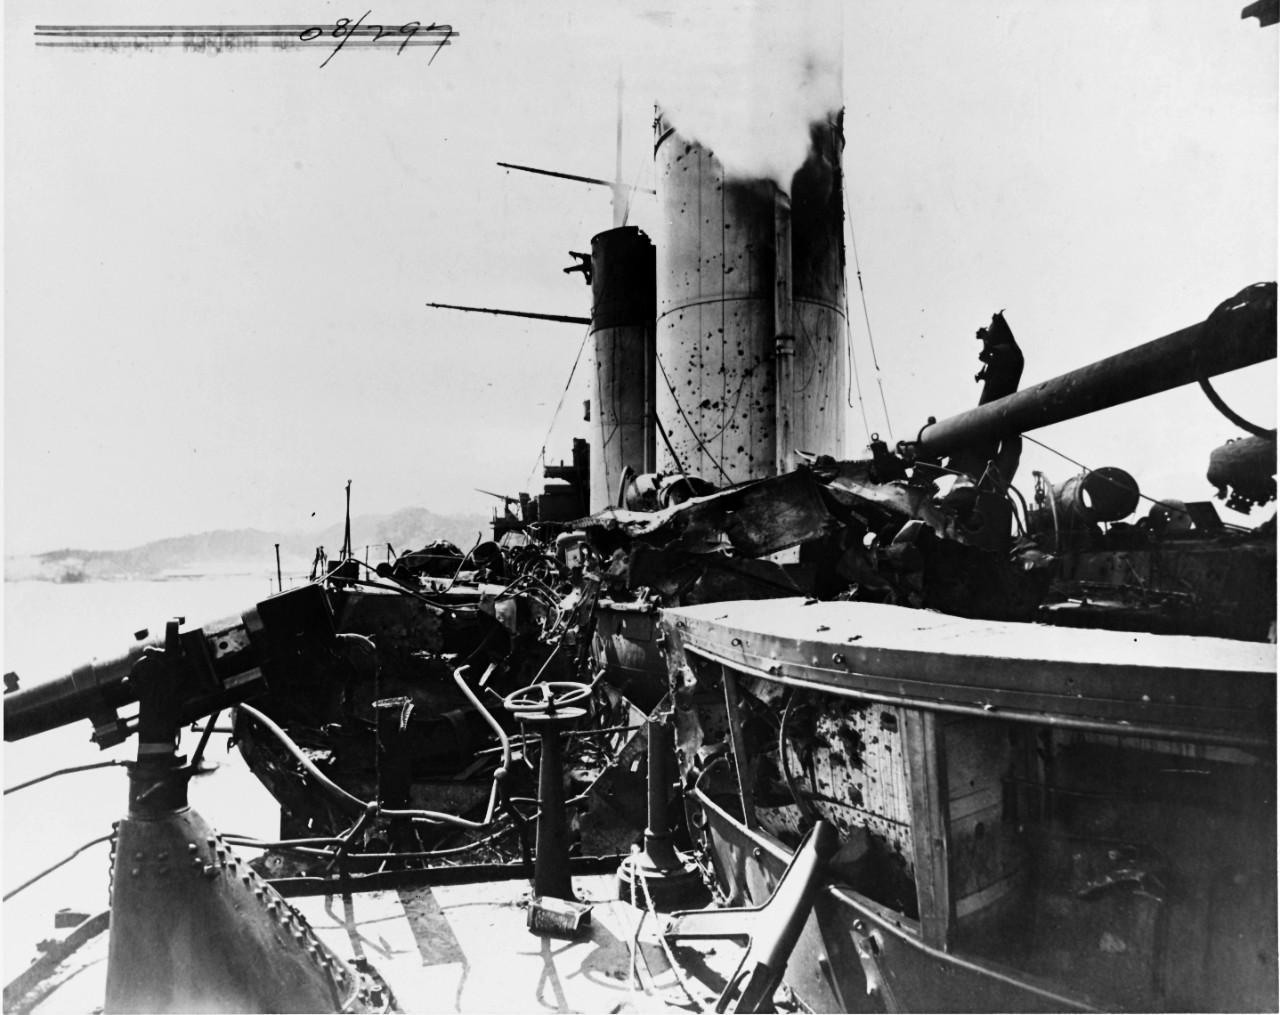 OREL (Russian battleship, 1902)